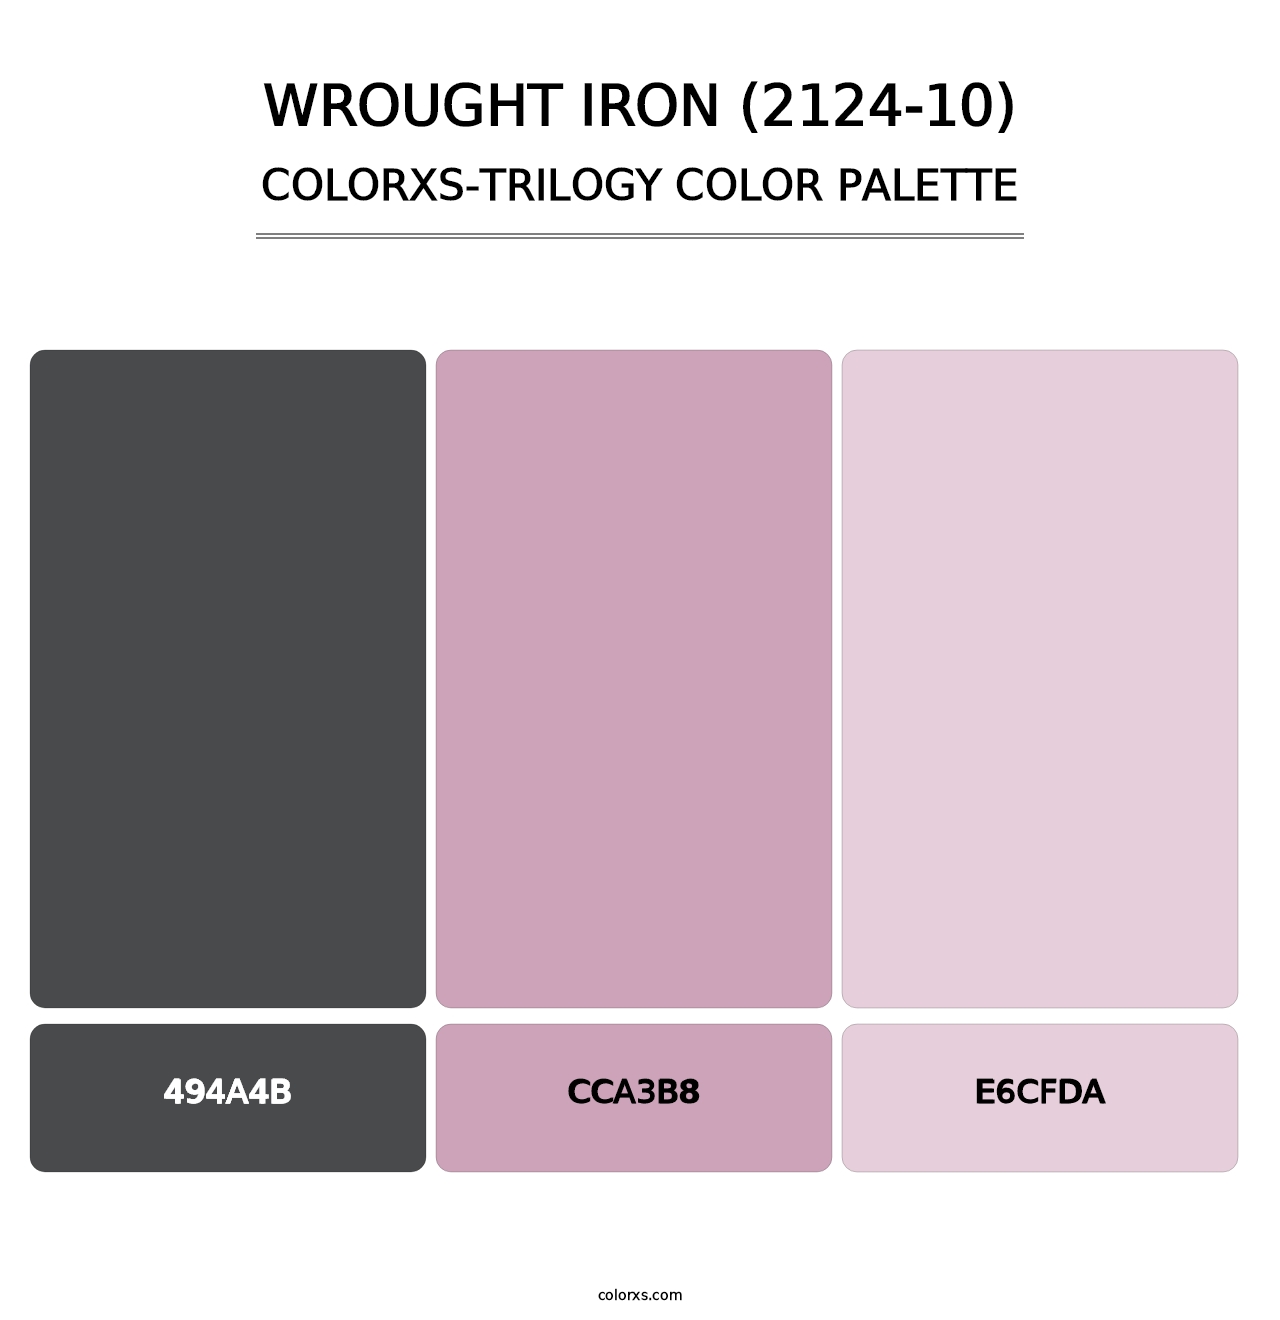 Wrought Iron (2124-10) - Colorxs Trilogy Palette